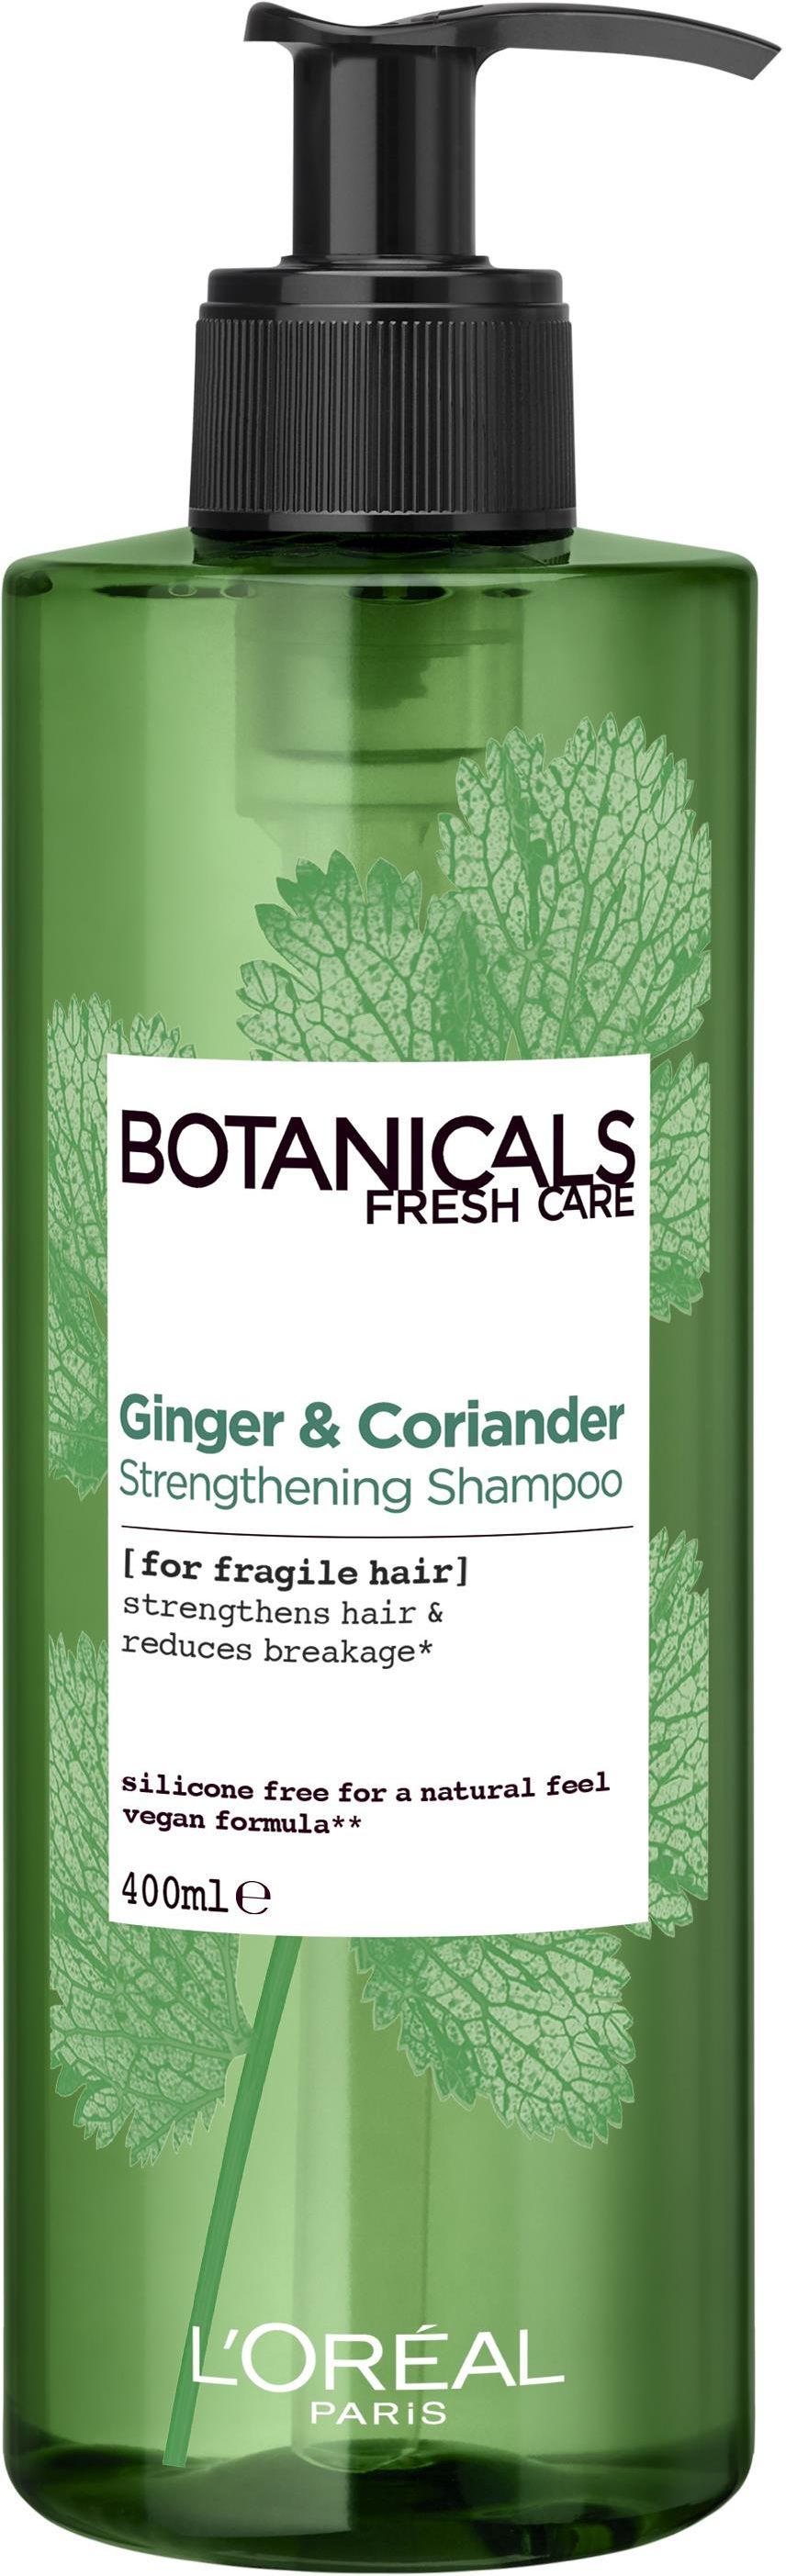 botanicals szampon